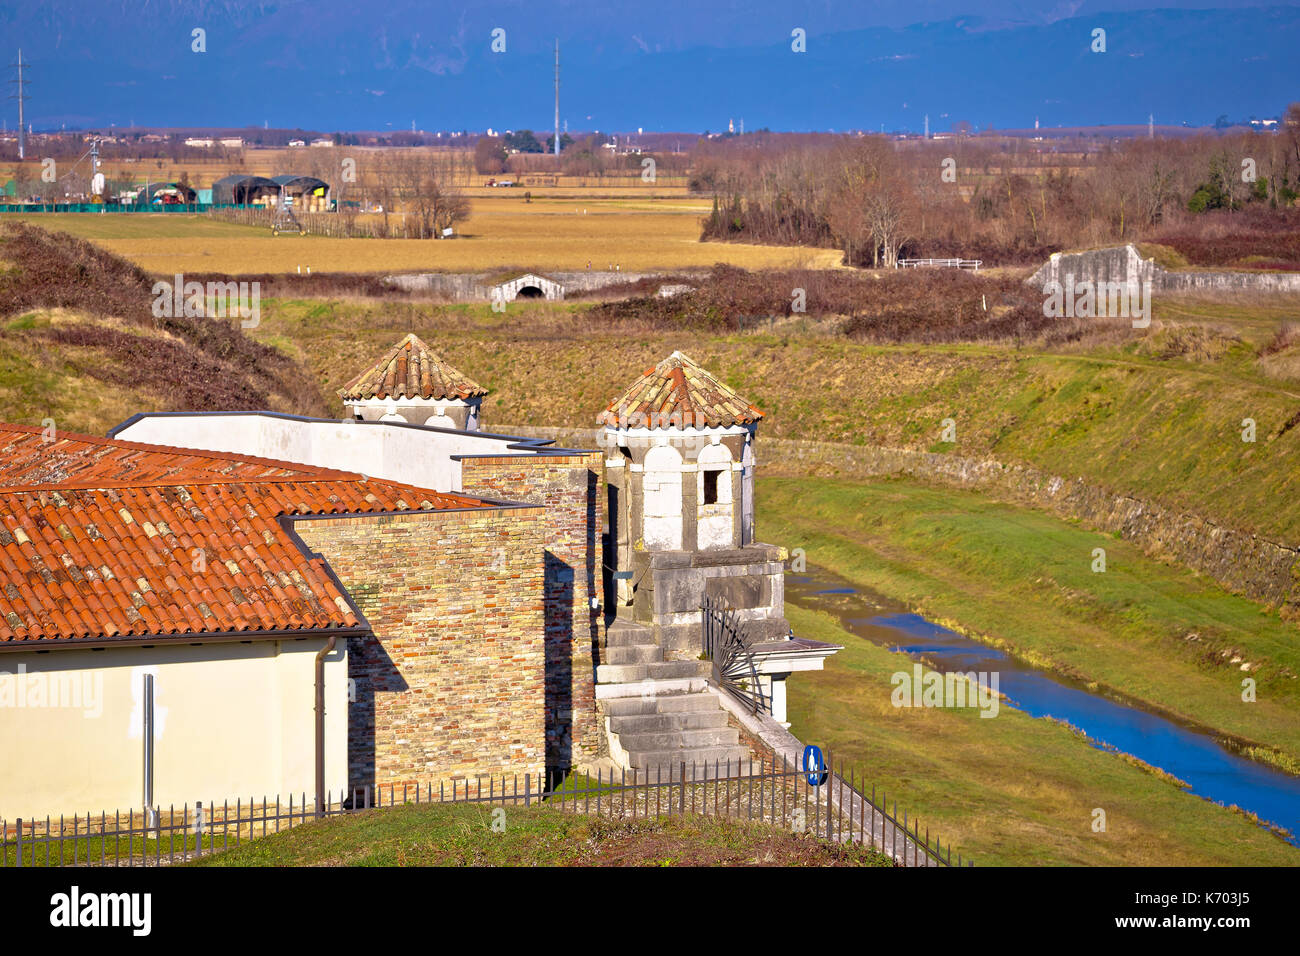 Town of Palmanova defense walls trenches and landmarks, UNESCO world heritage site in Friuli Venezia Giulia region of Italy Stock Photo